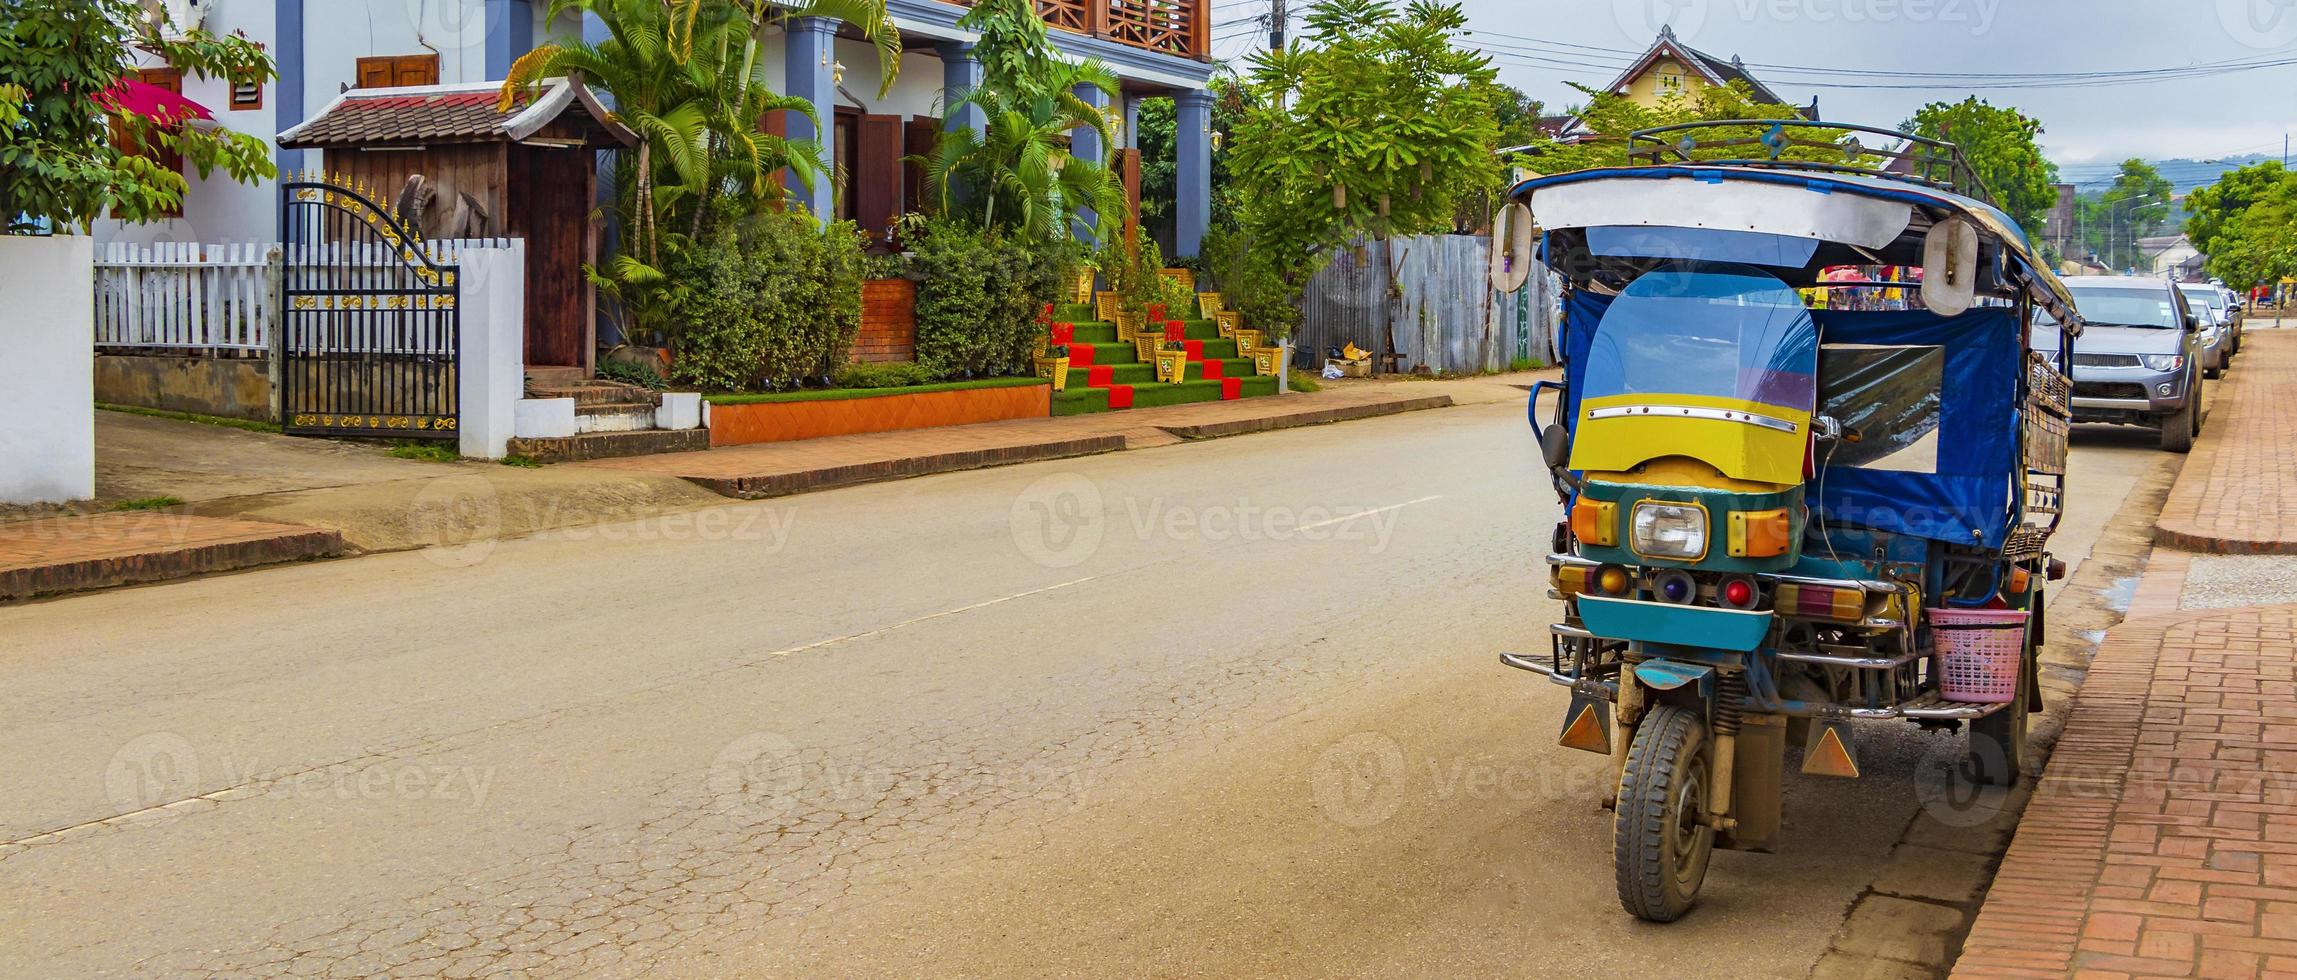 Típico y colorido tuk tuk rickshaw antiguo en Luang Prabang, Laos. foto